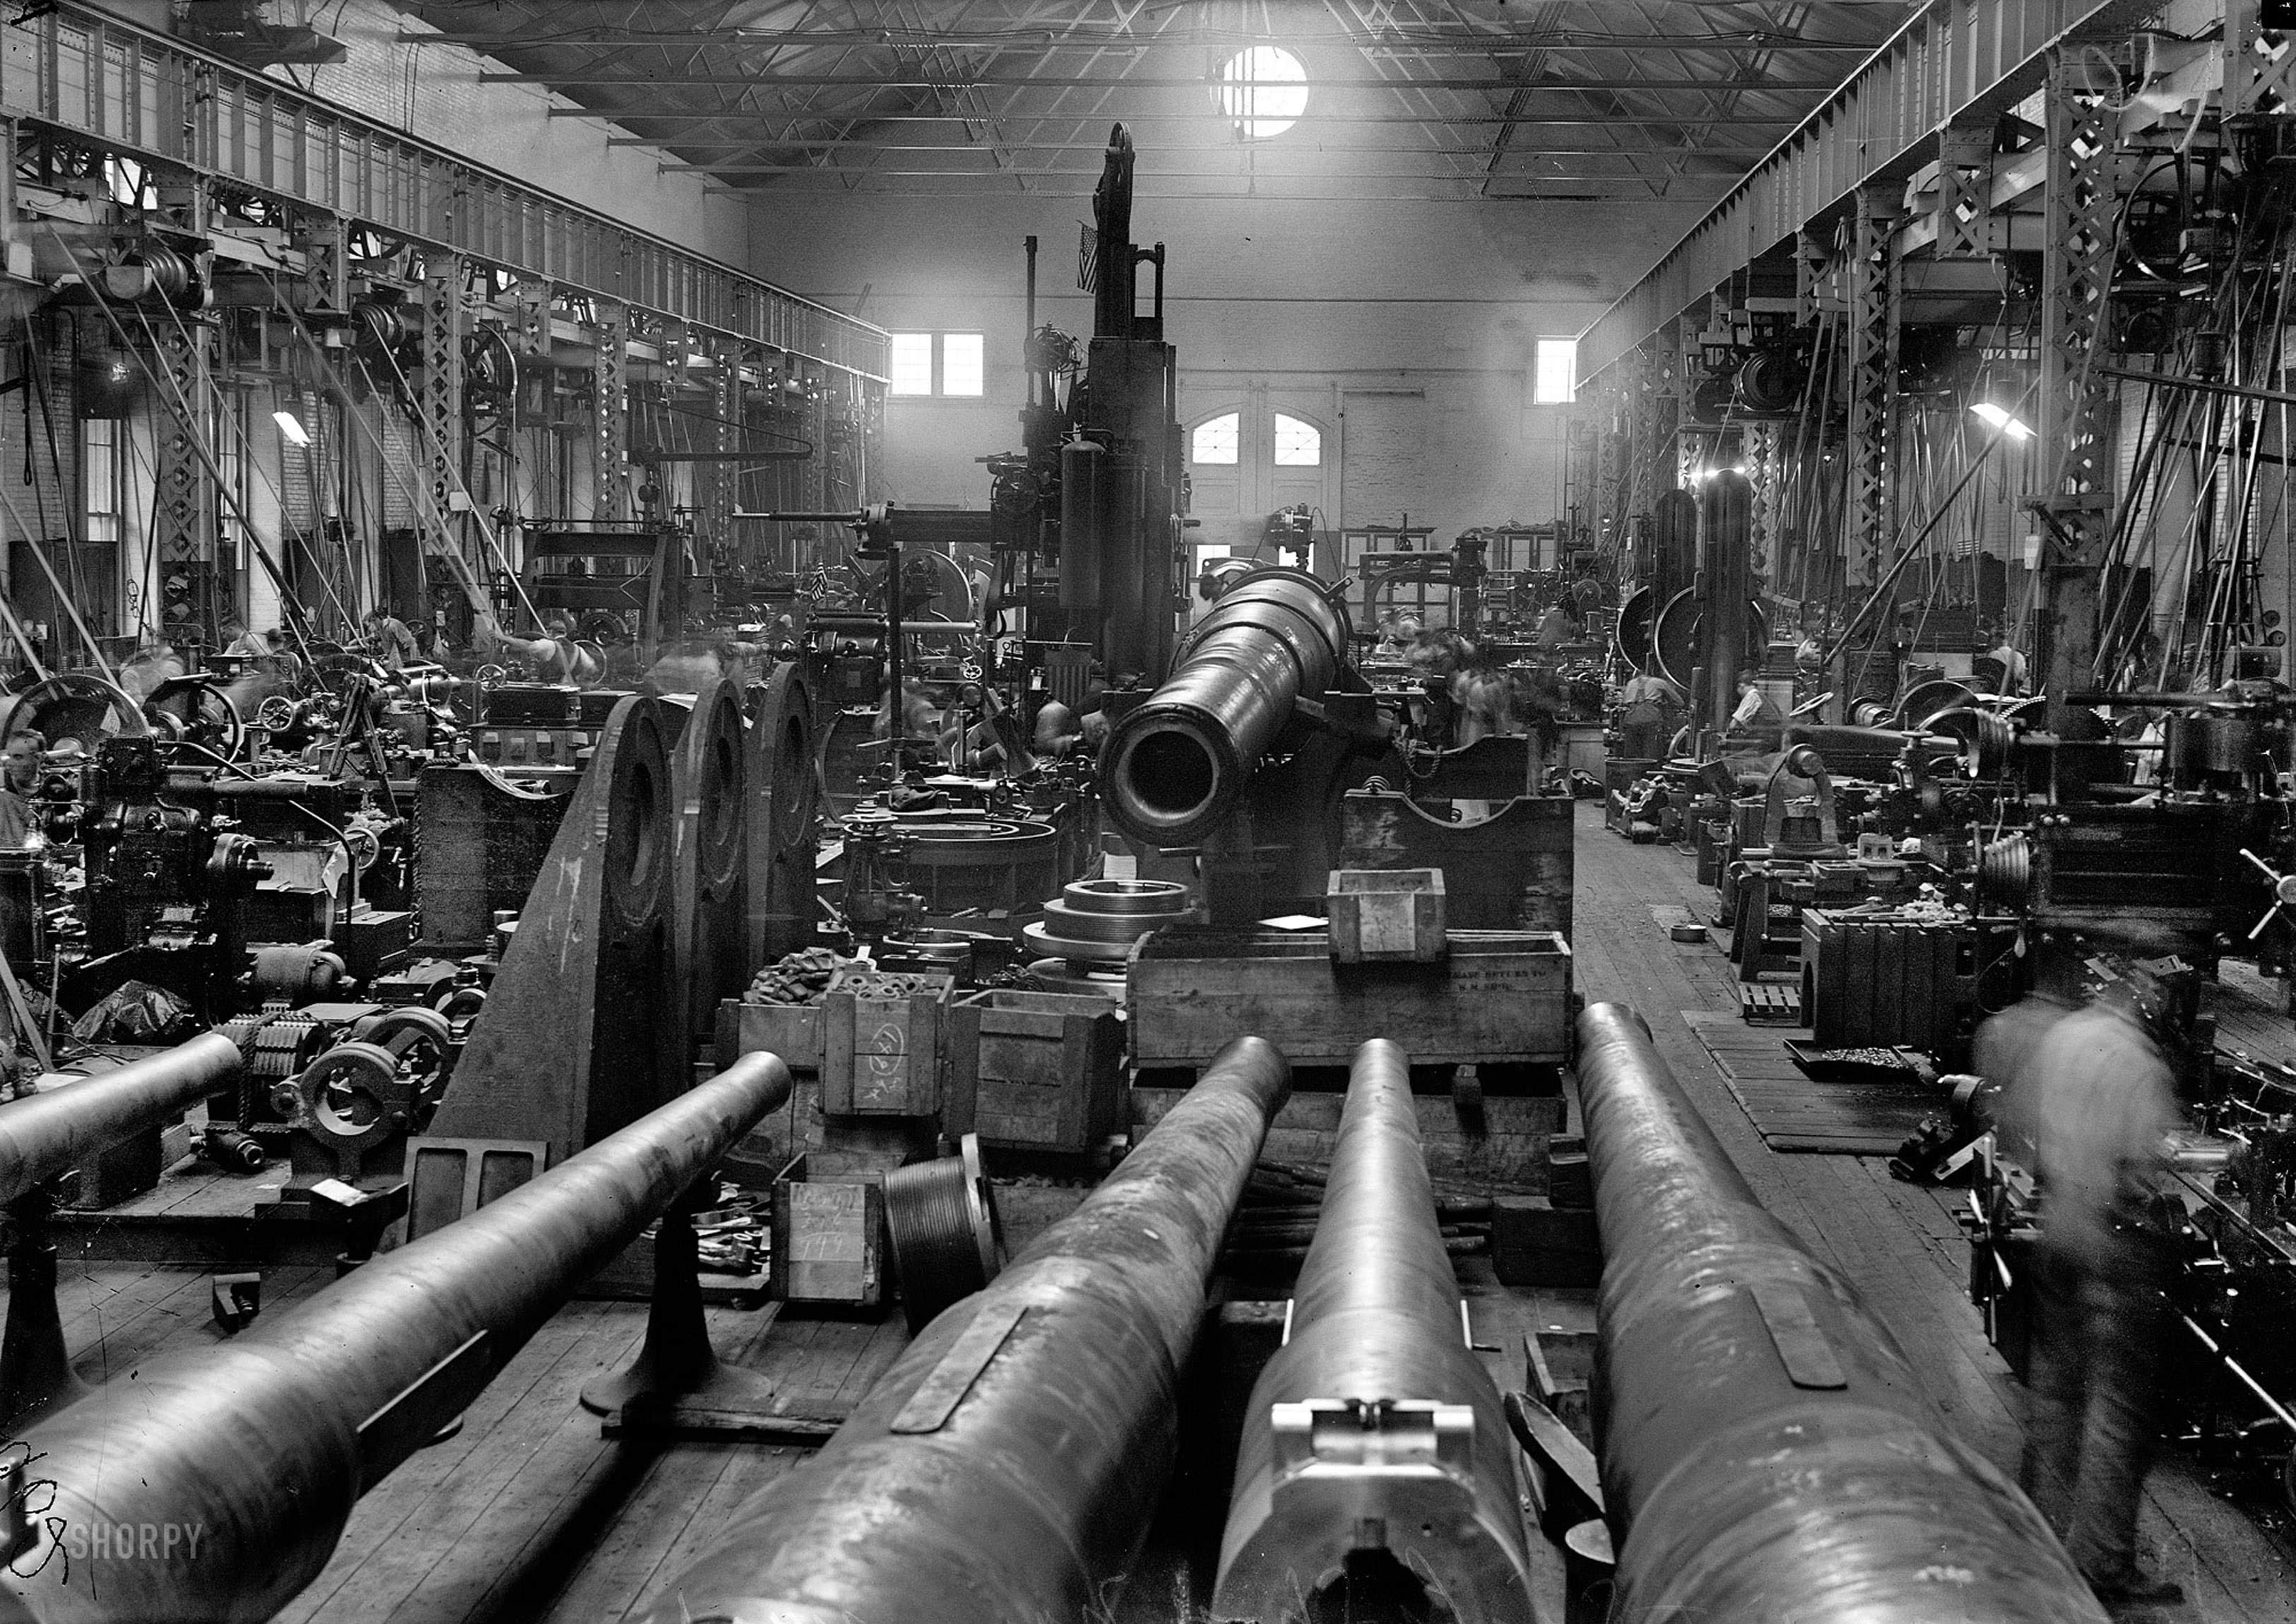 Naval guns possibly for battleship New Mexico, New York Navy Yard, Brooklyn, New York, United States, 1917